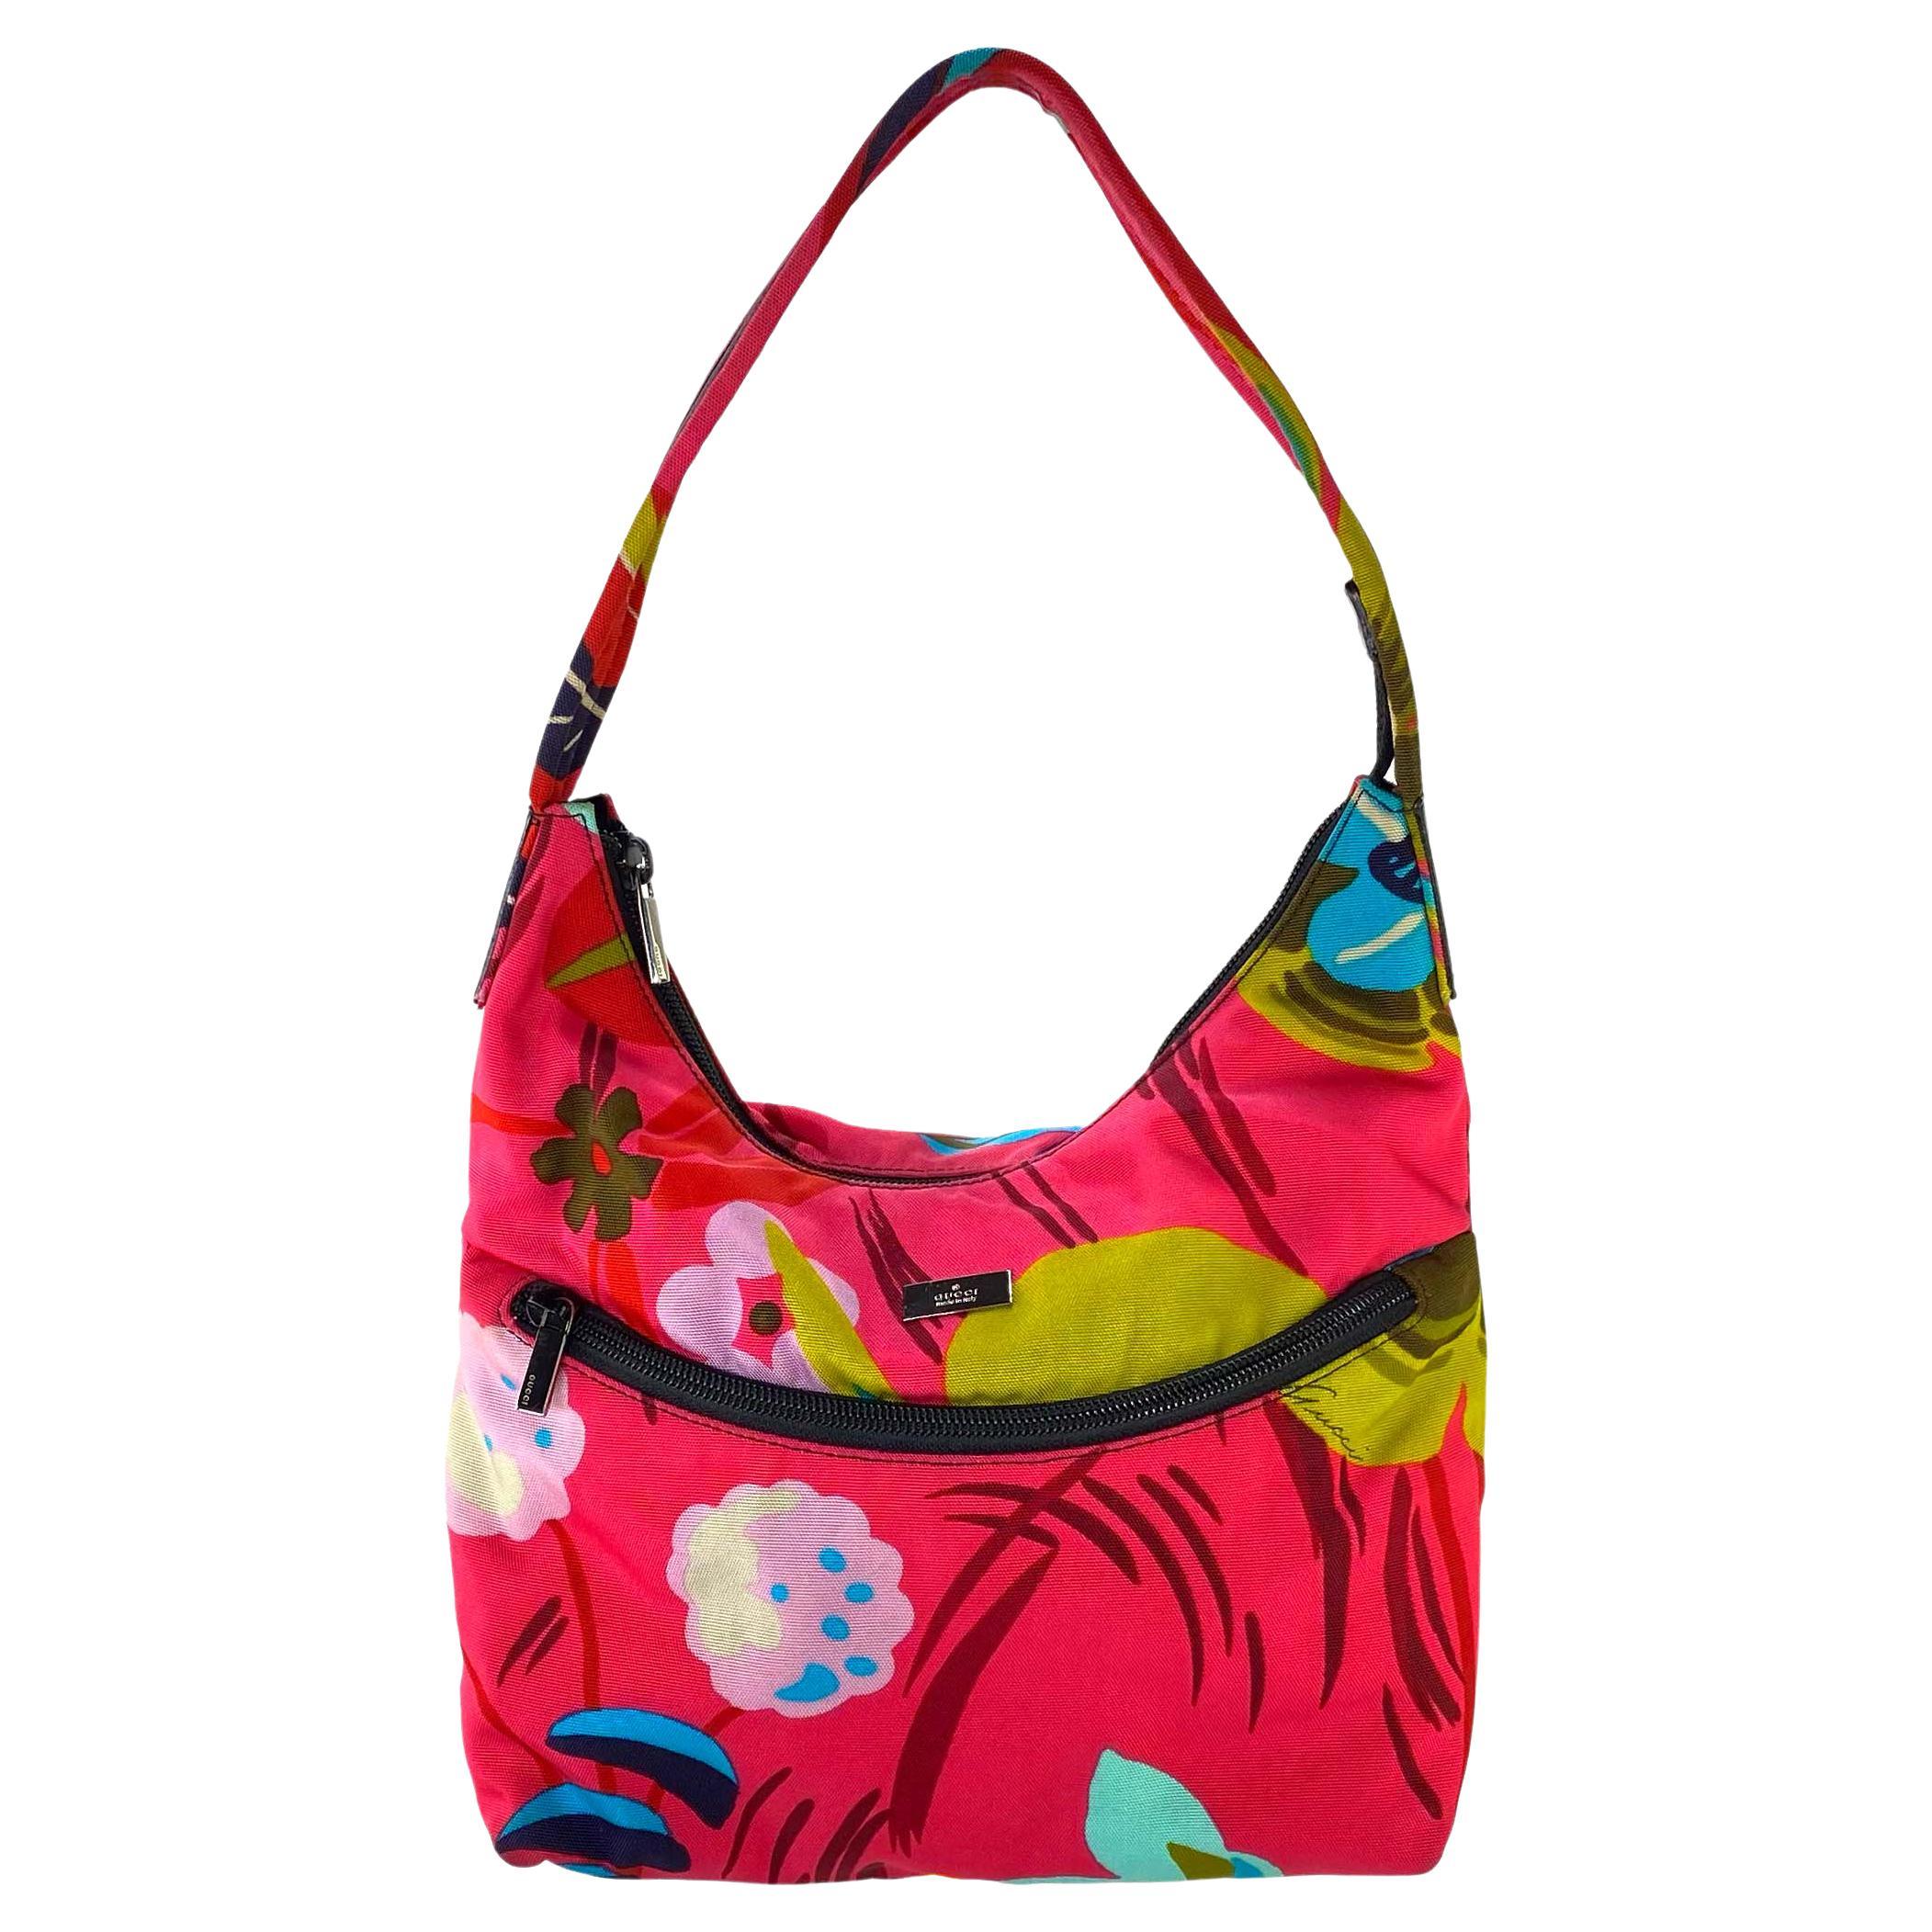 S/S 1999 Gucci by Tom Ford Pink Floral Nylon Shoulder Bag For Sale